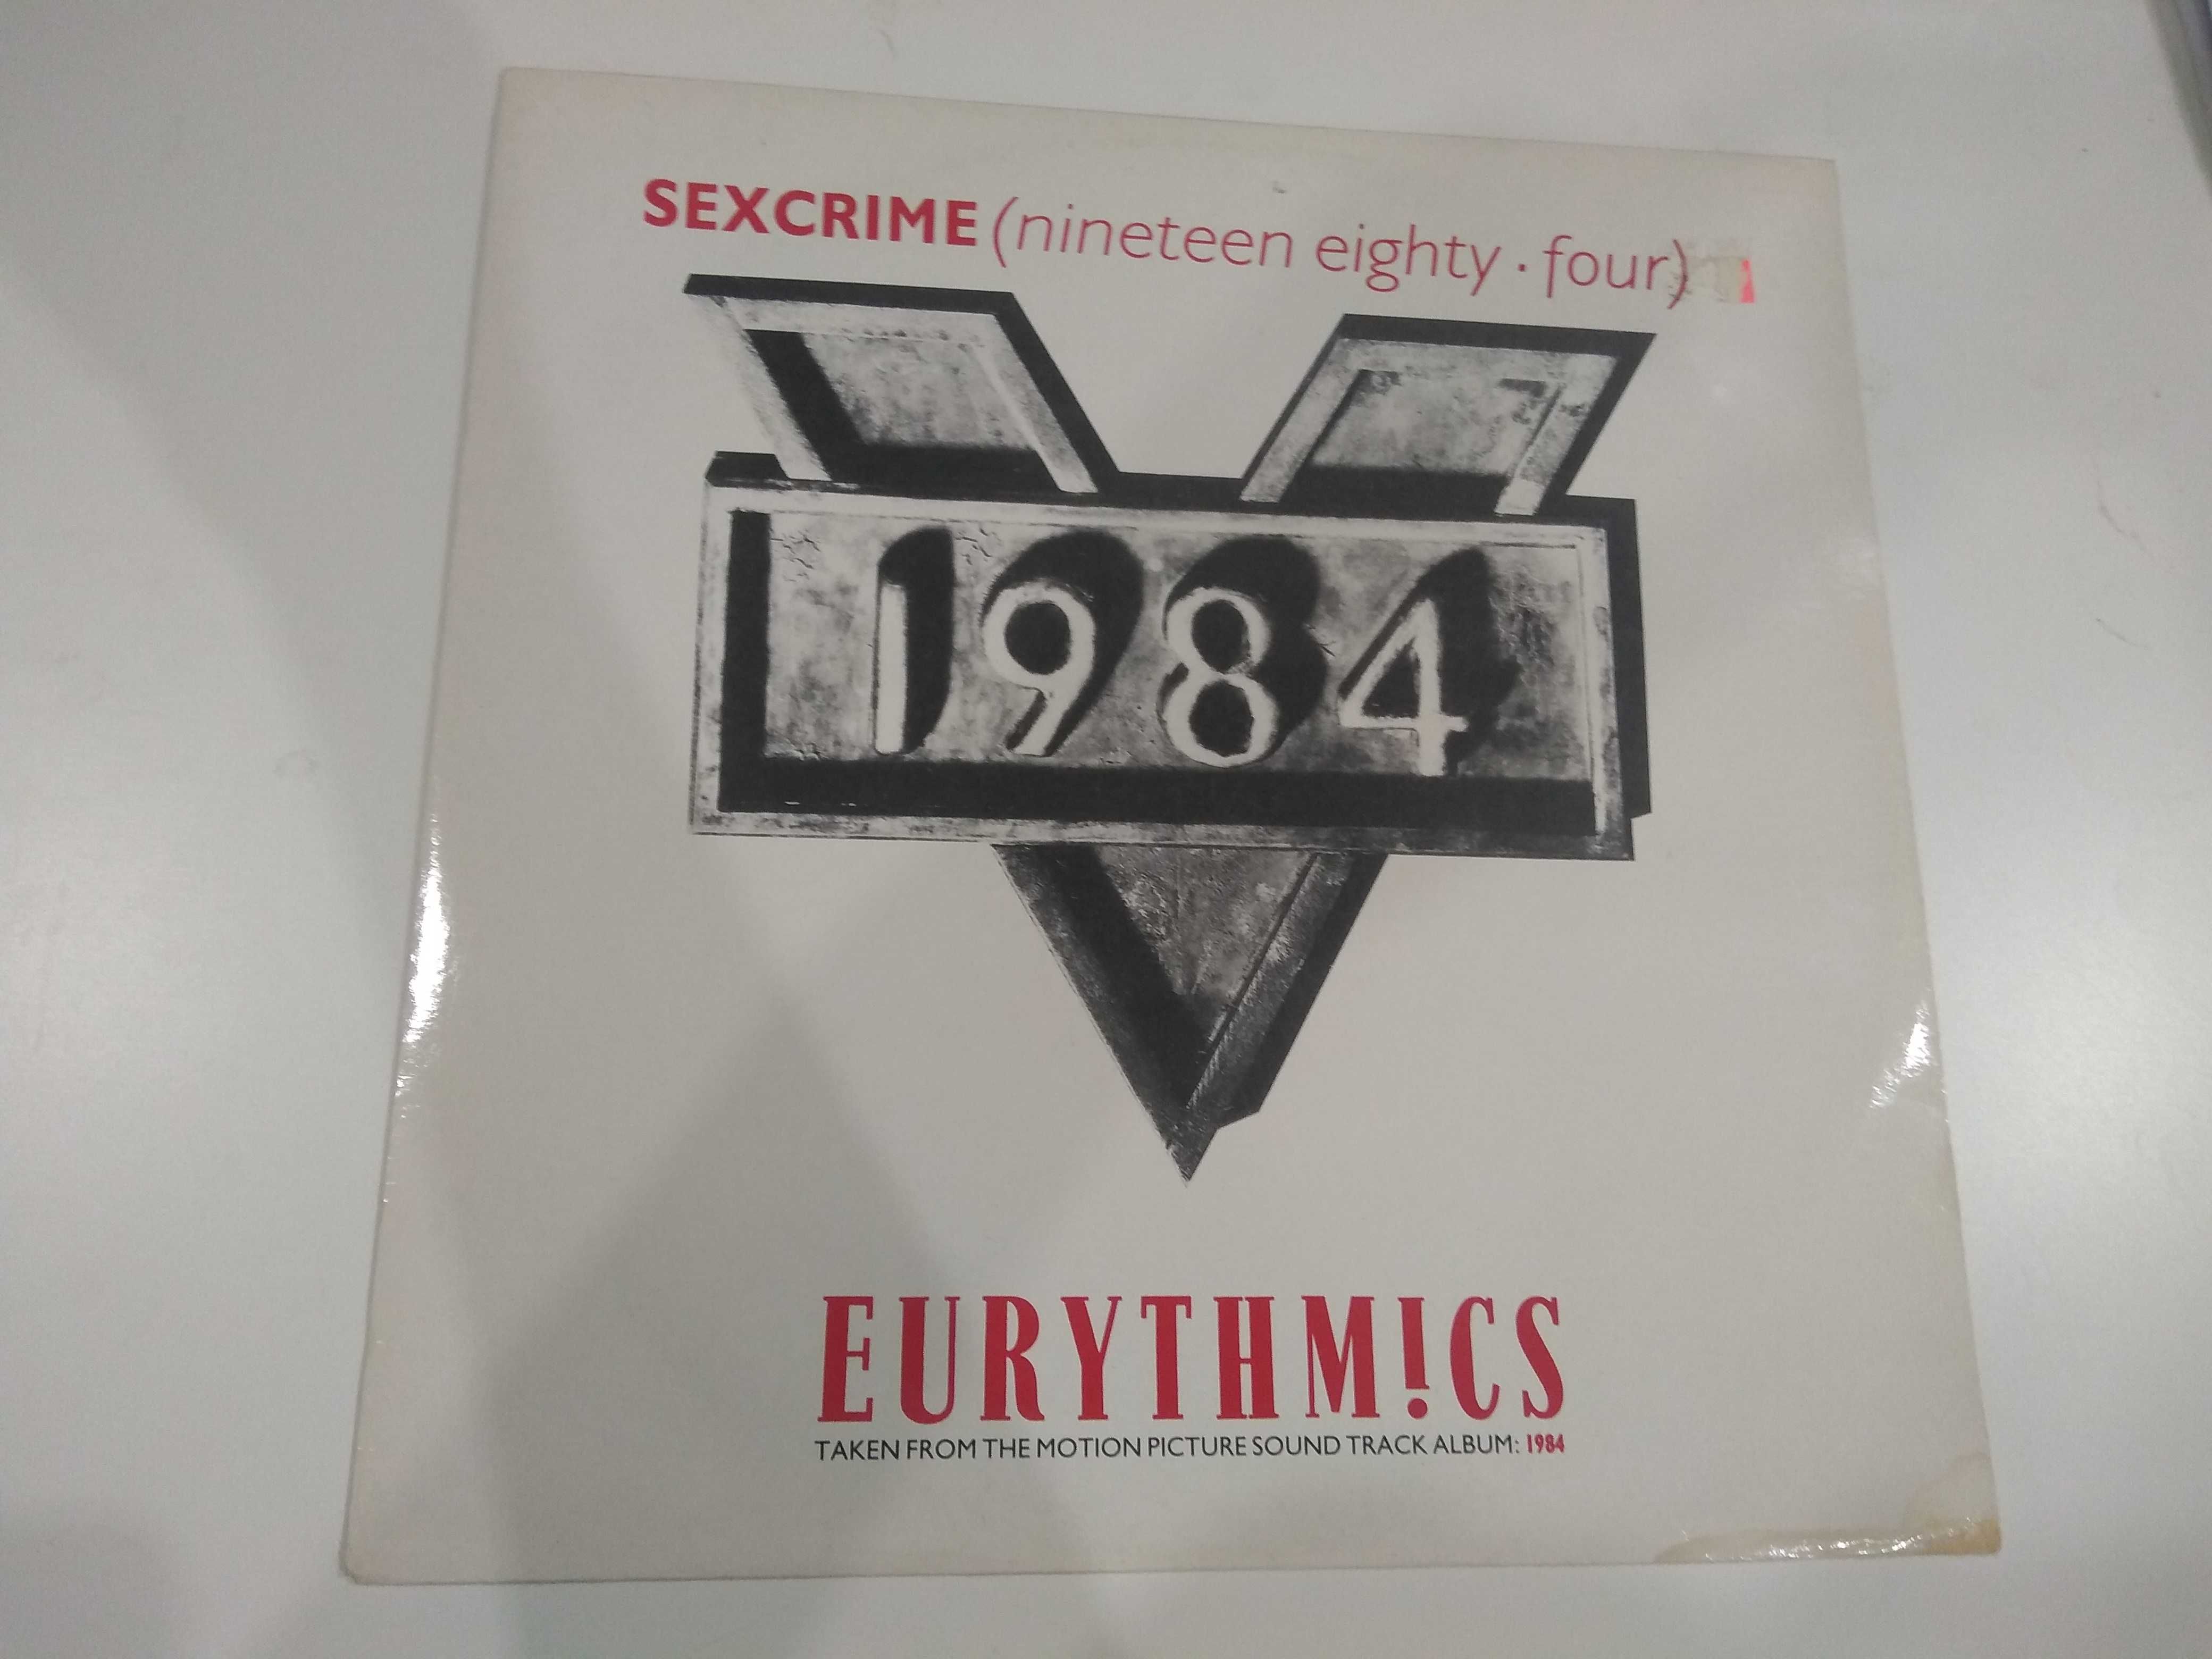 Dobra płyta - Eurythmics sexcrime 1984